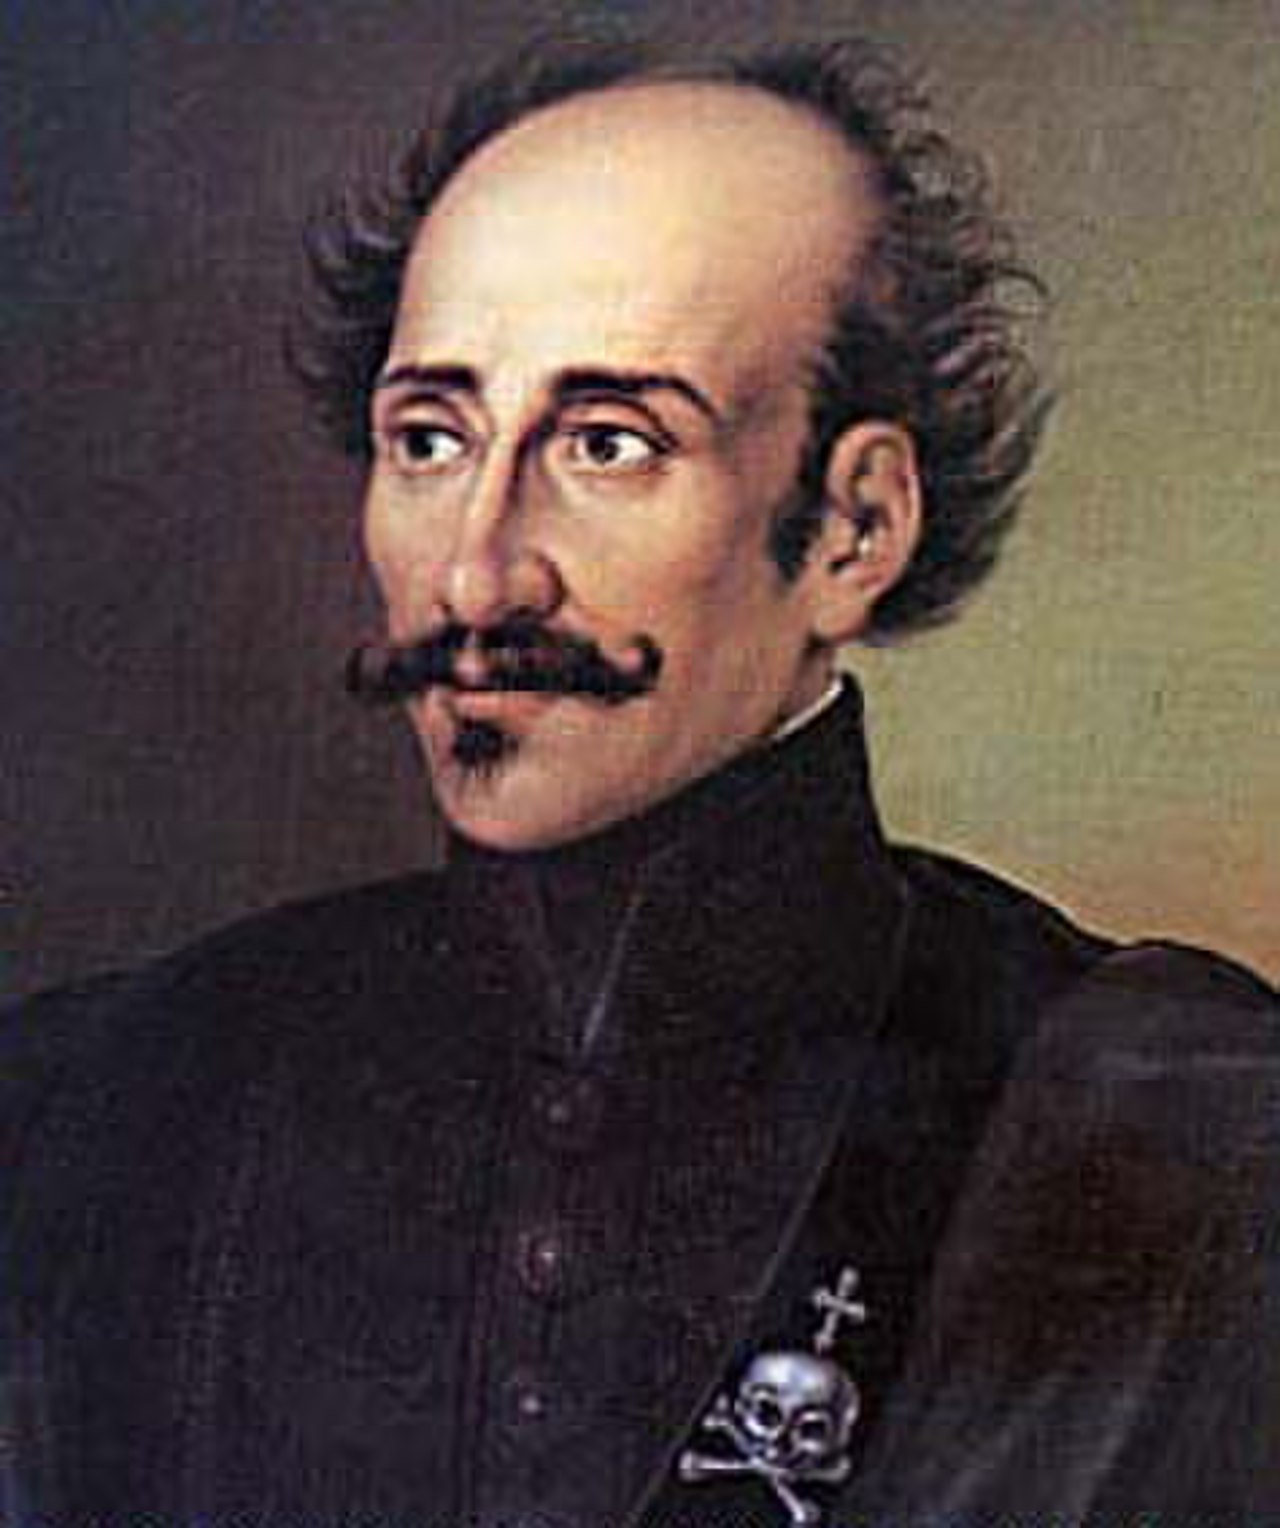 Portrait of a balding man with a handlebar mustache